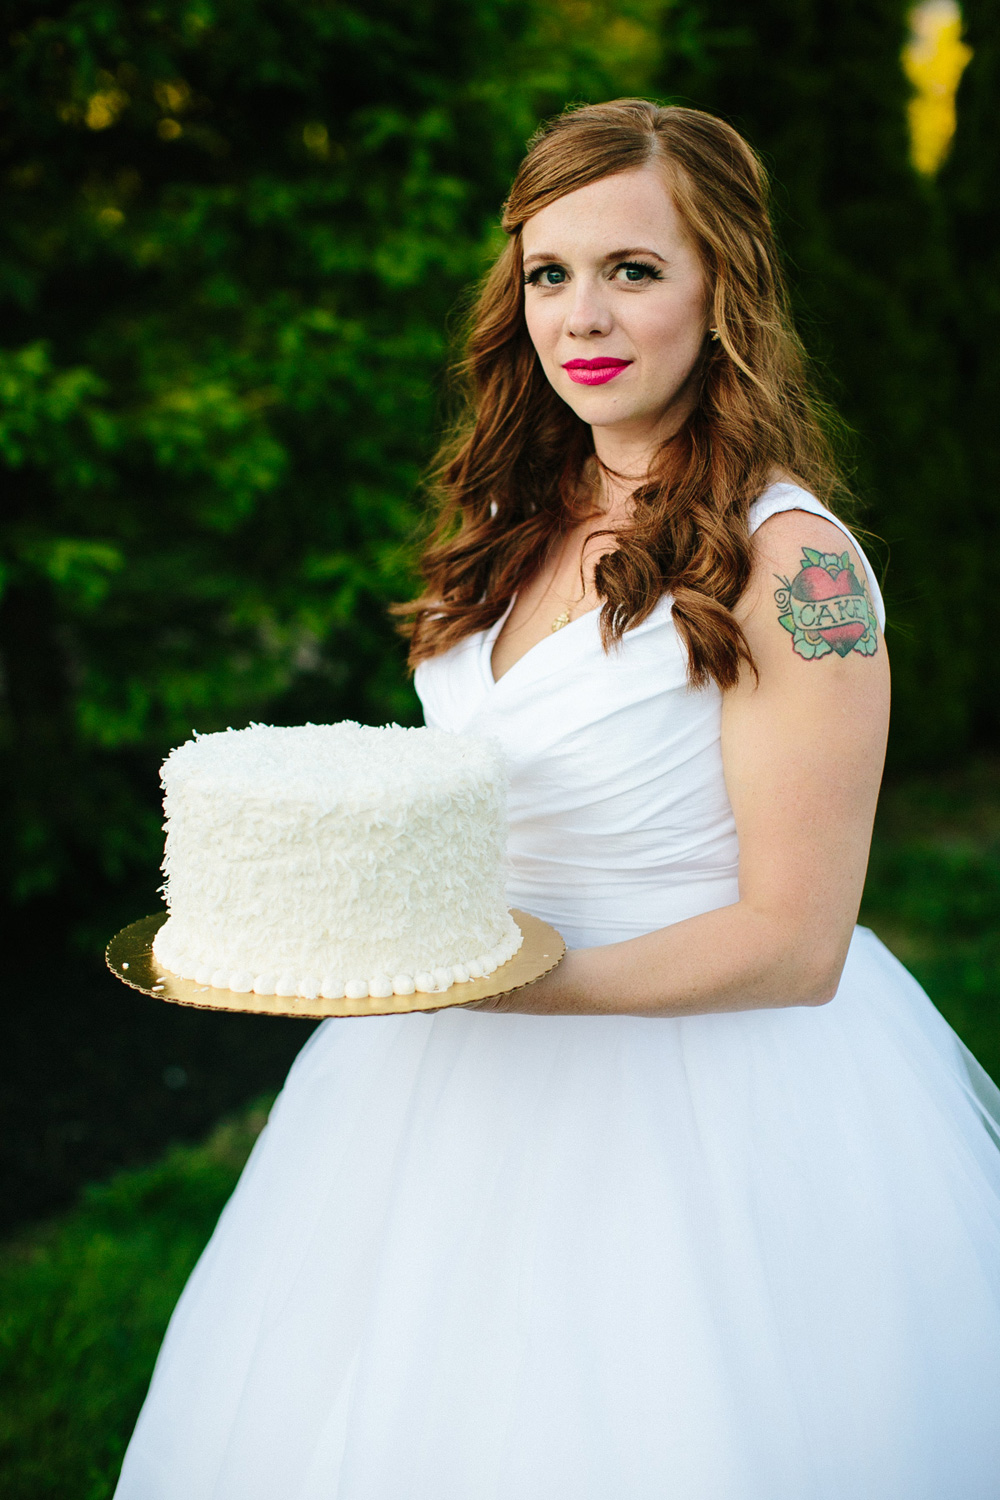 052-creative-tattooed-bridal-portrait-with-cake.jpg